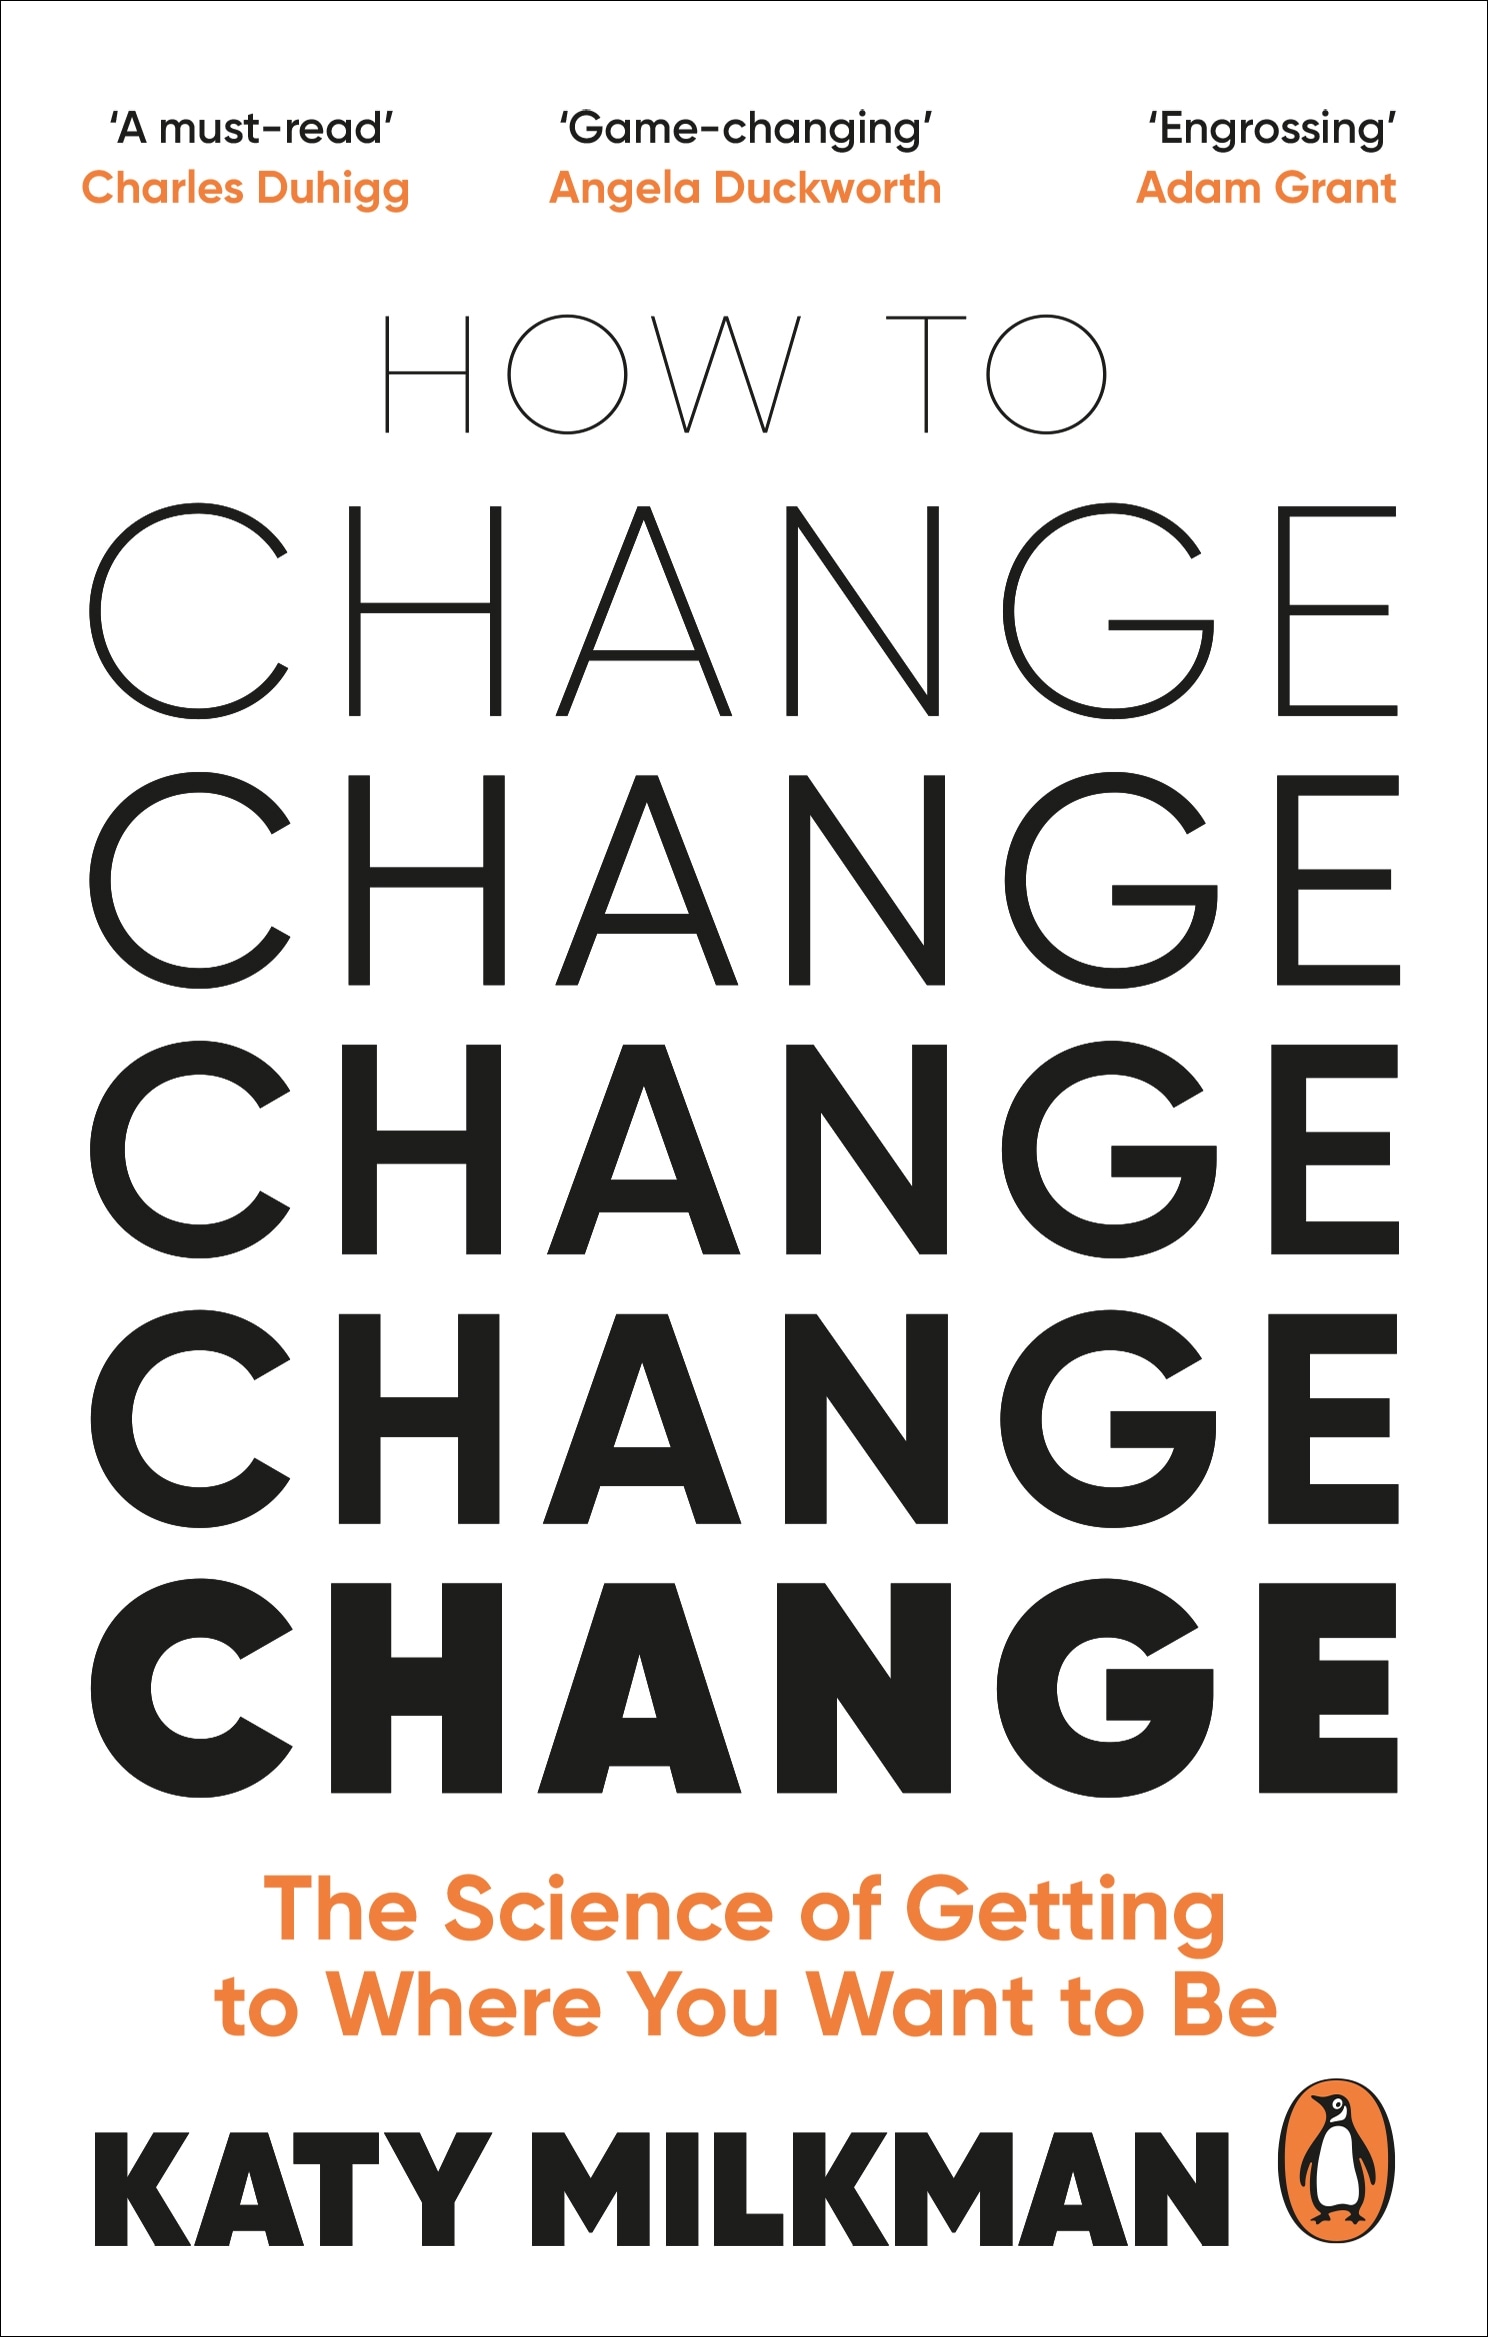 Book “How to Change” by Katy Milkman — January 6, 2022